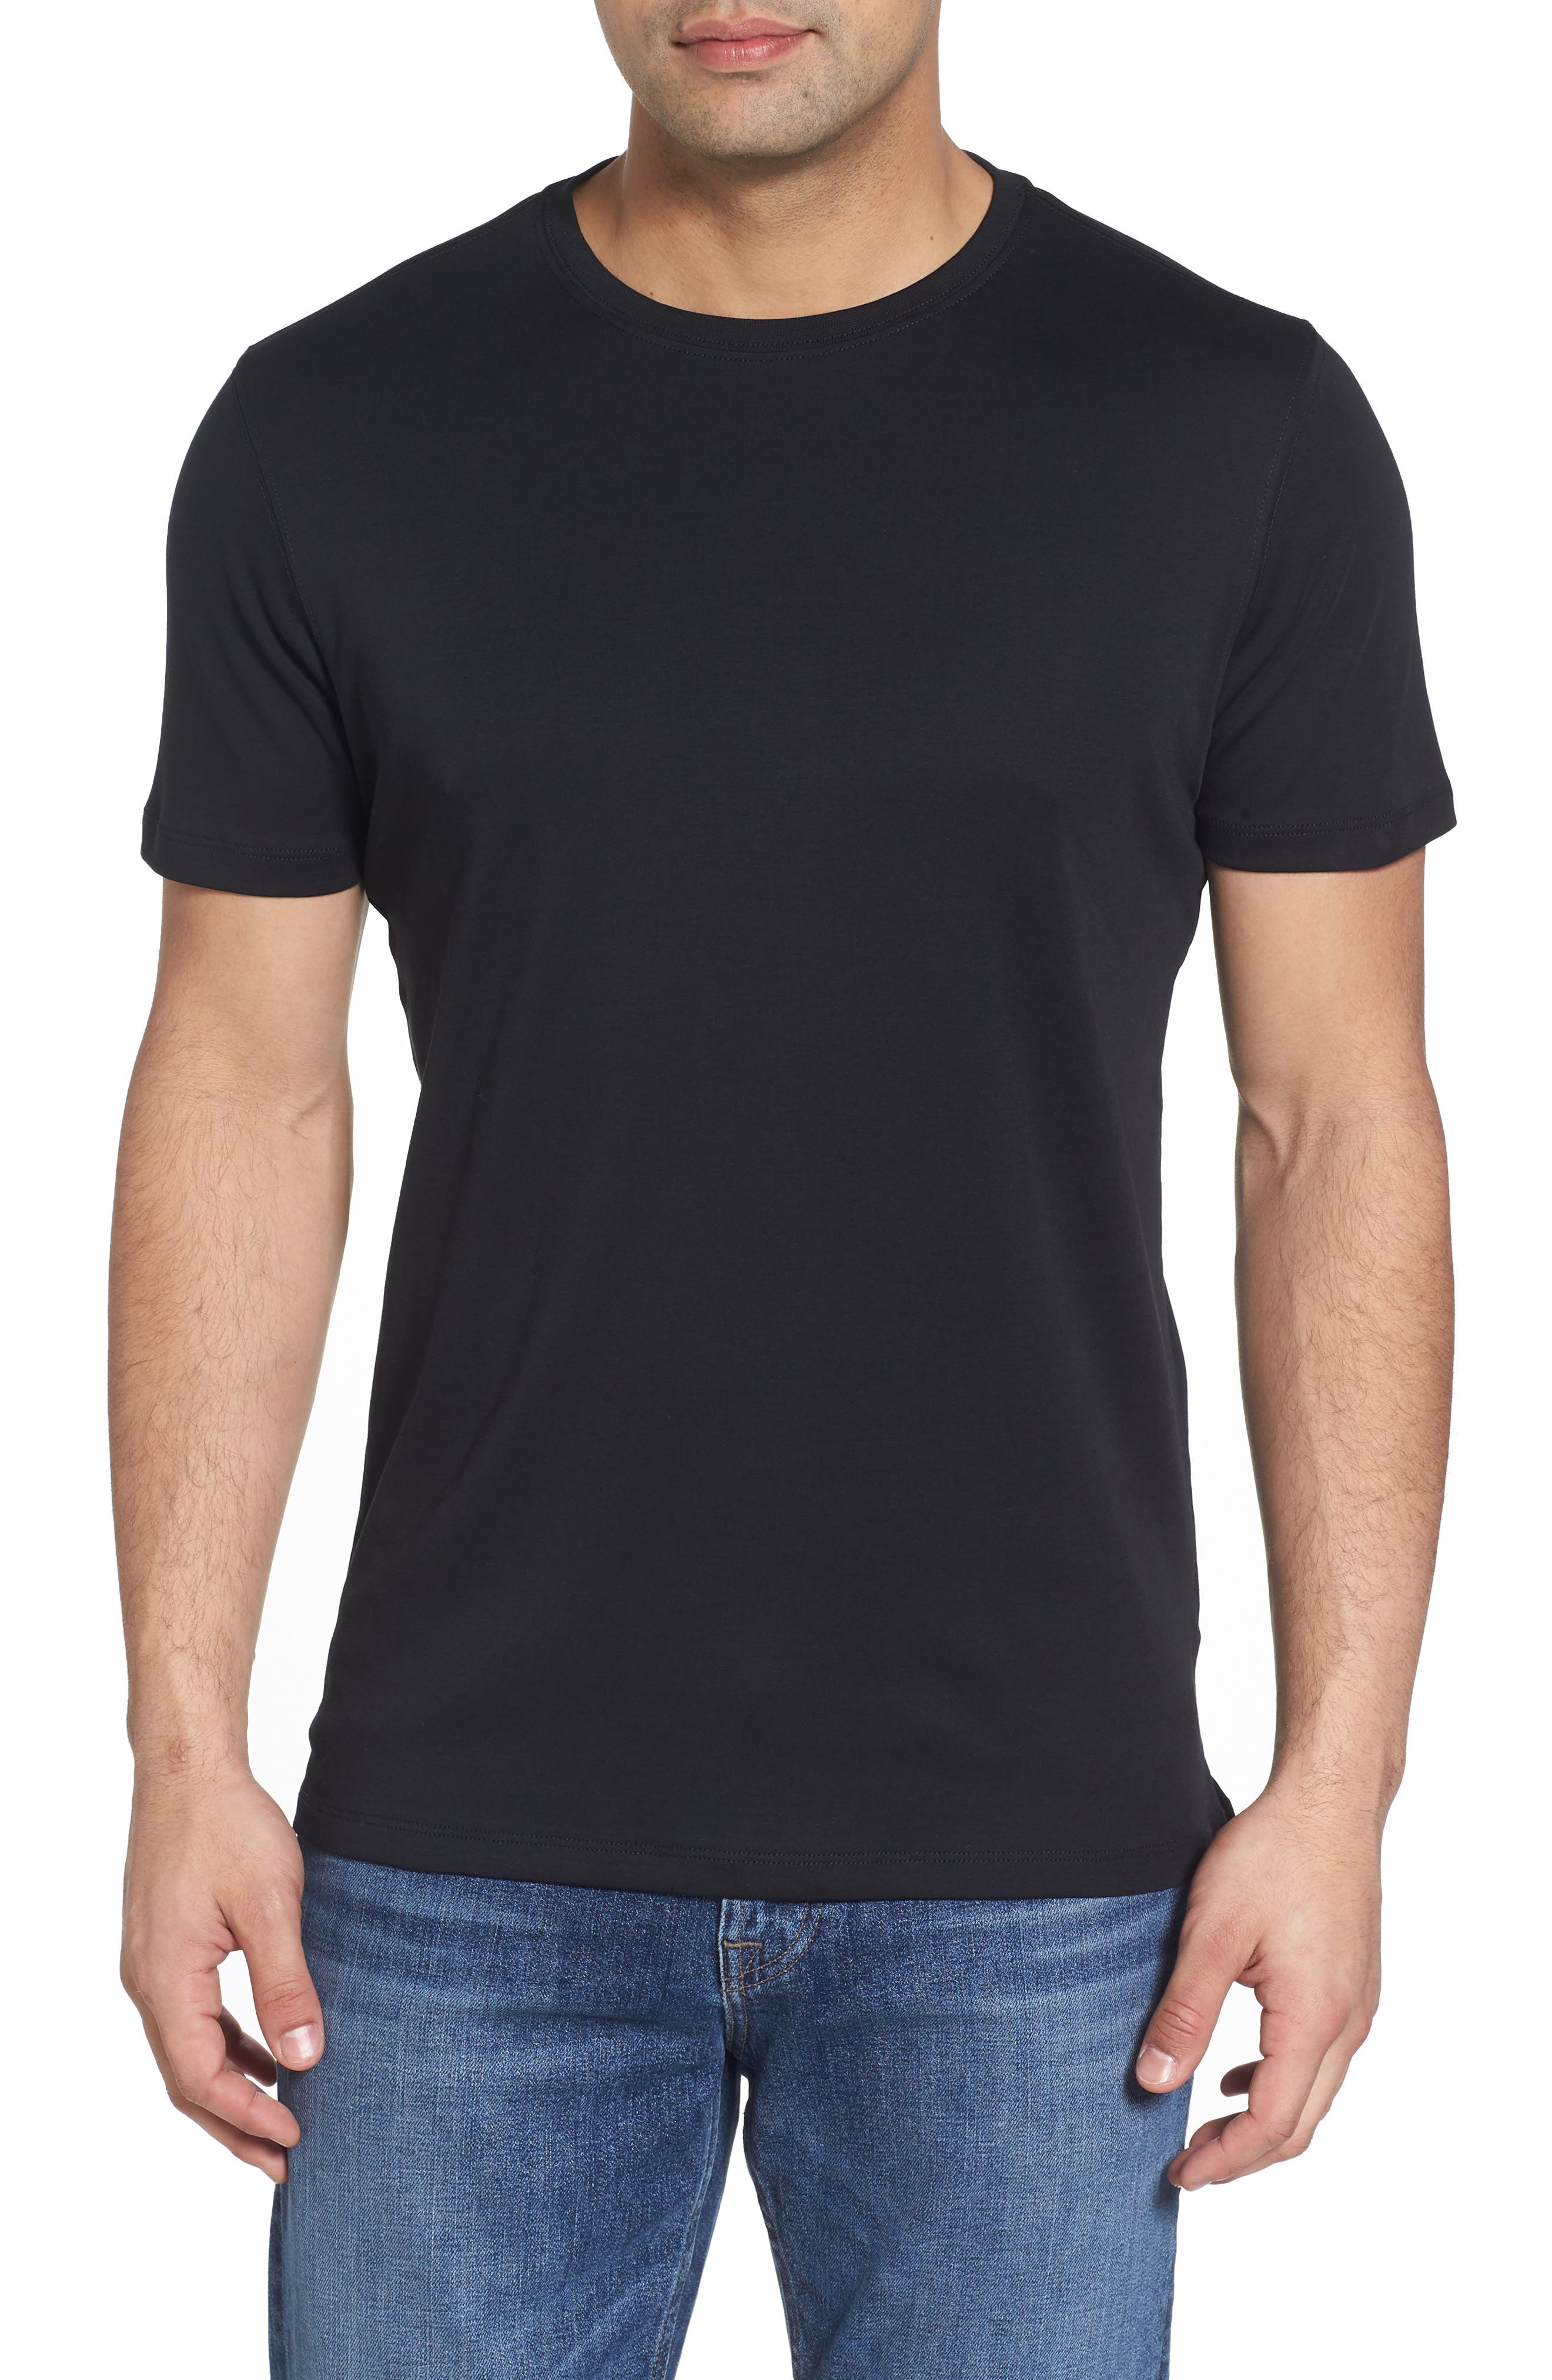 Men's Shirts | Nordstrom